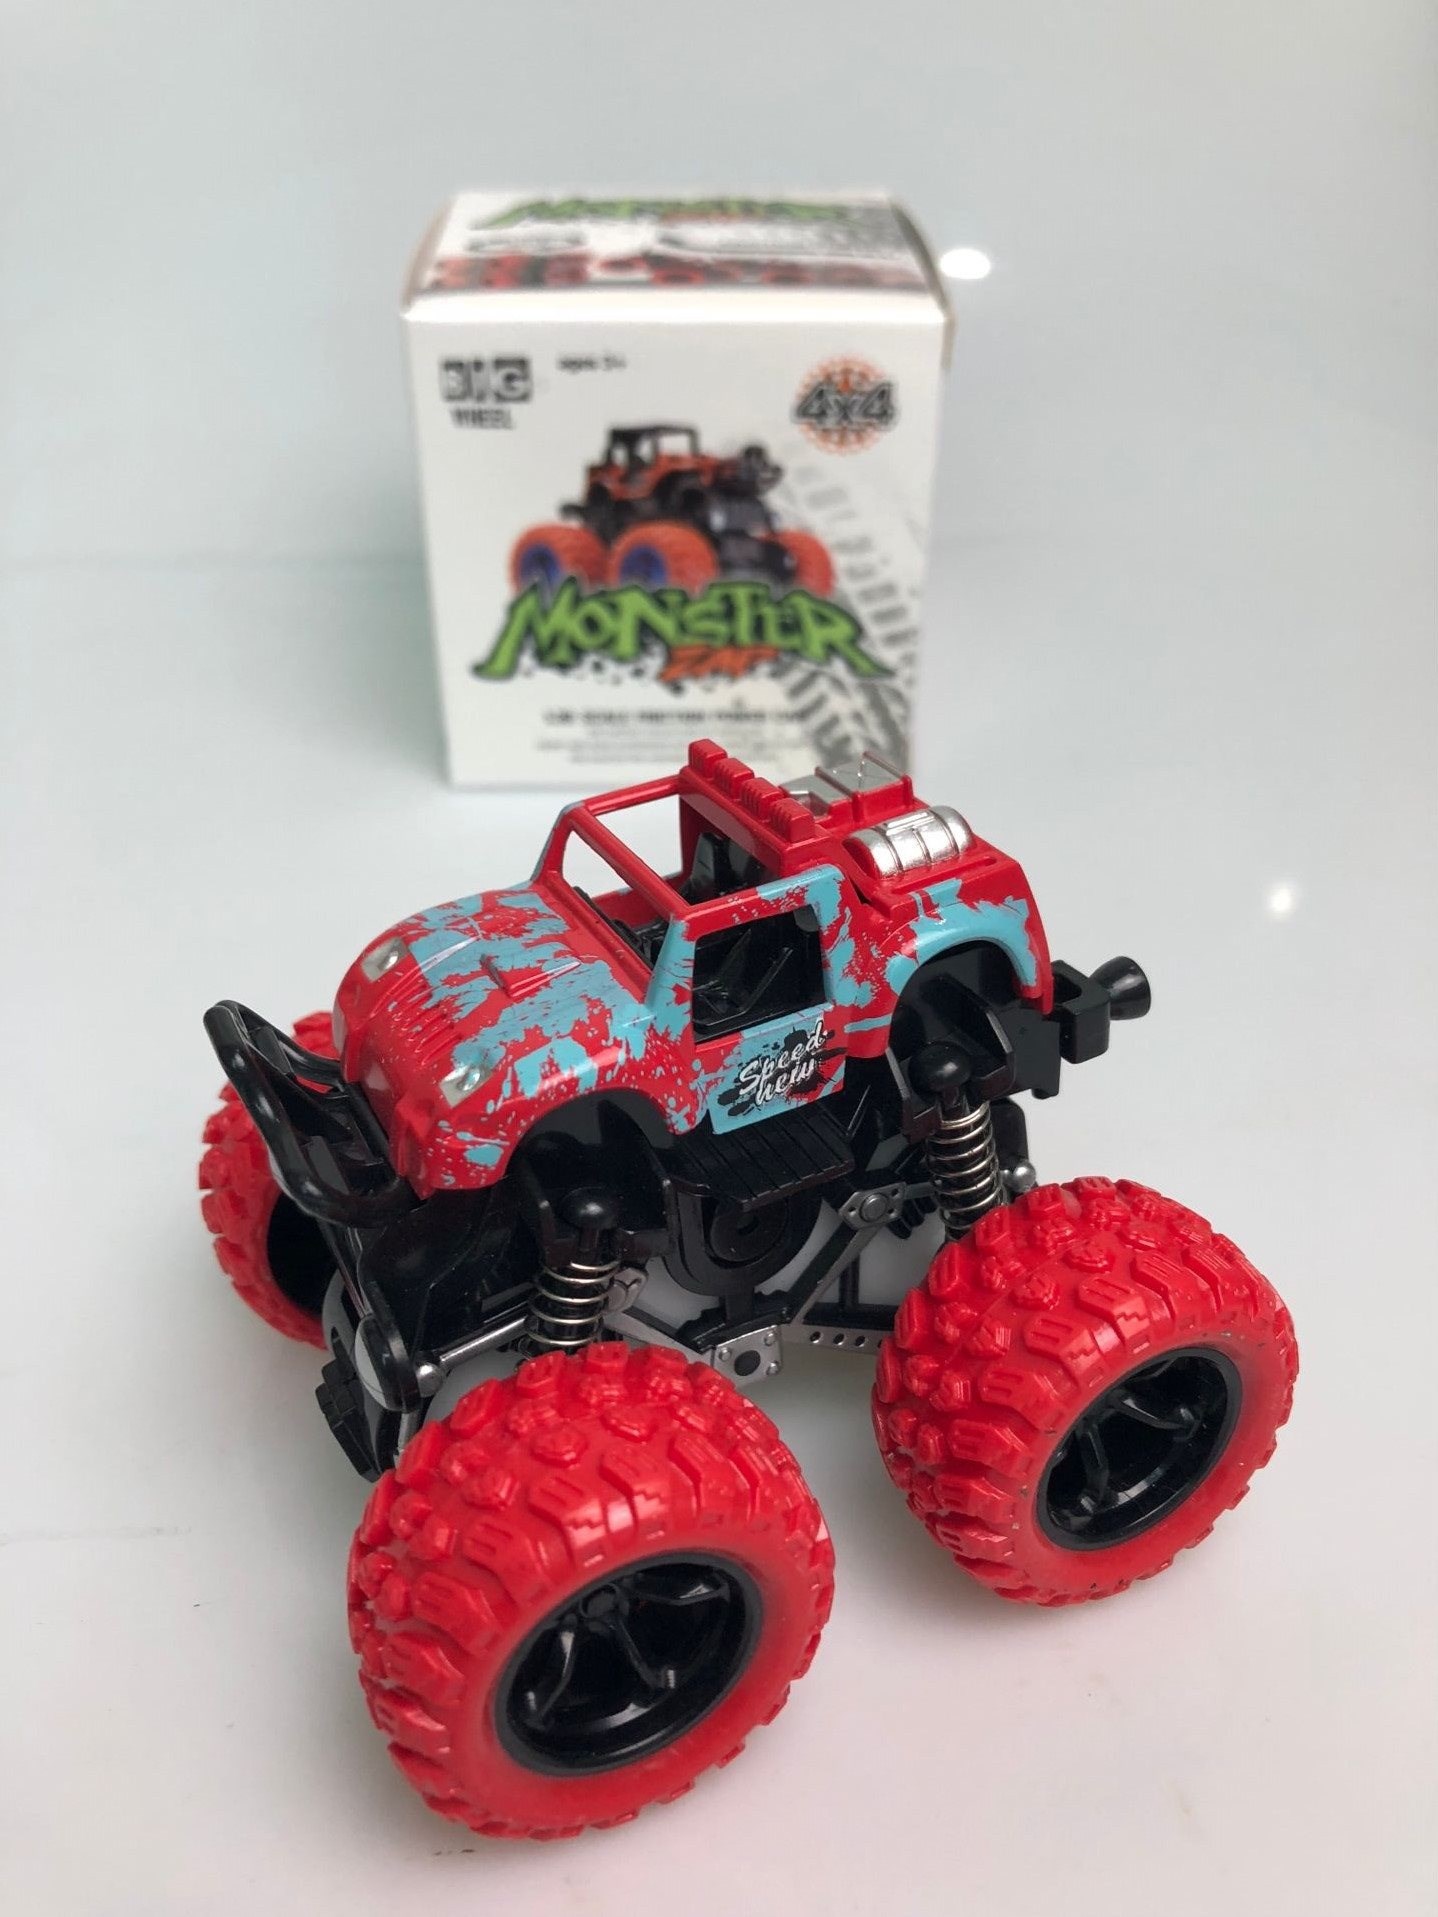 Suvs model cars for kids and boys toy cars惯性四驱越野车 - 图0